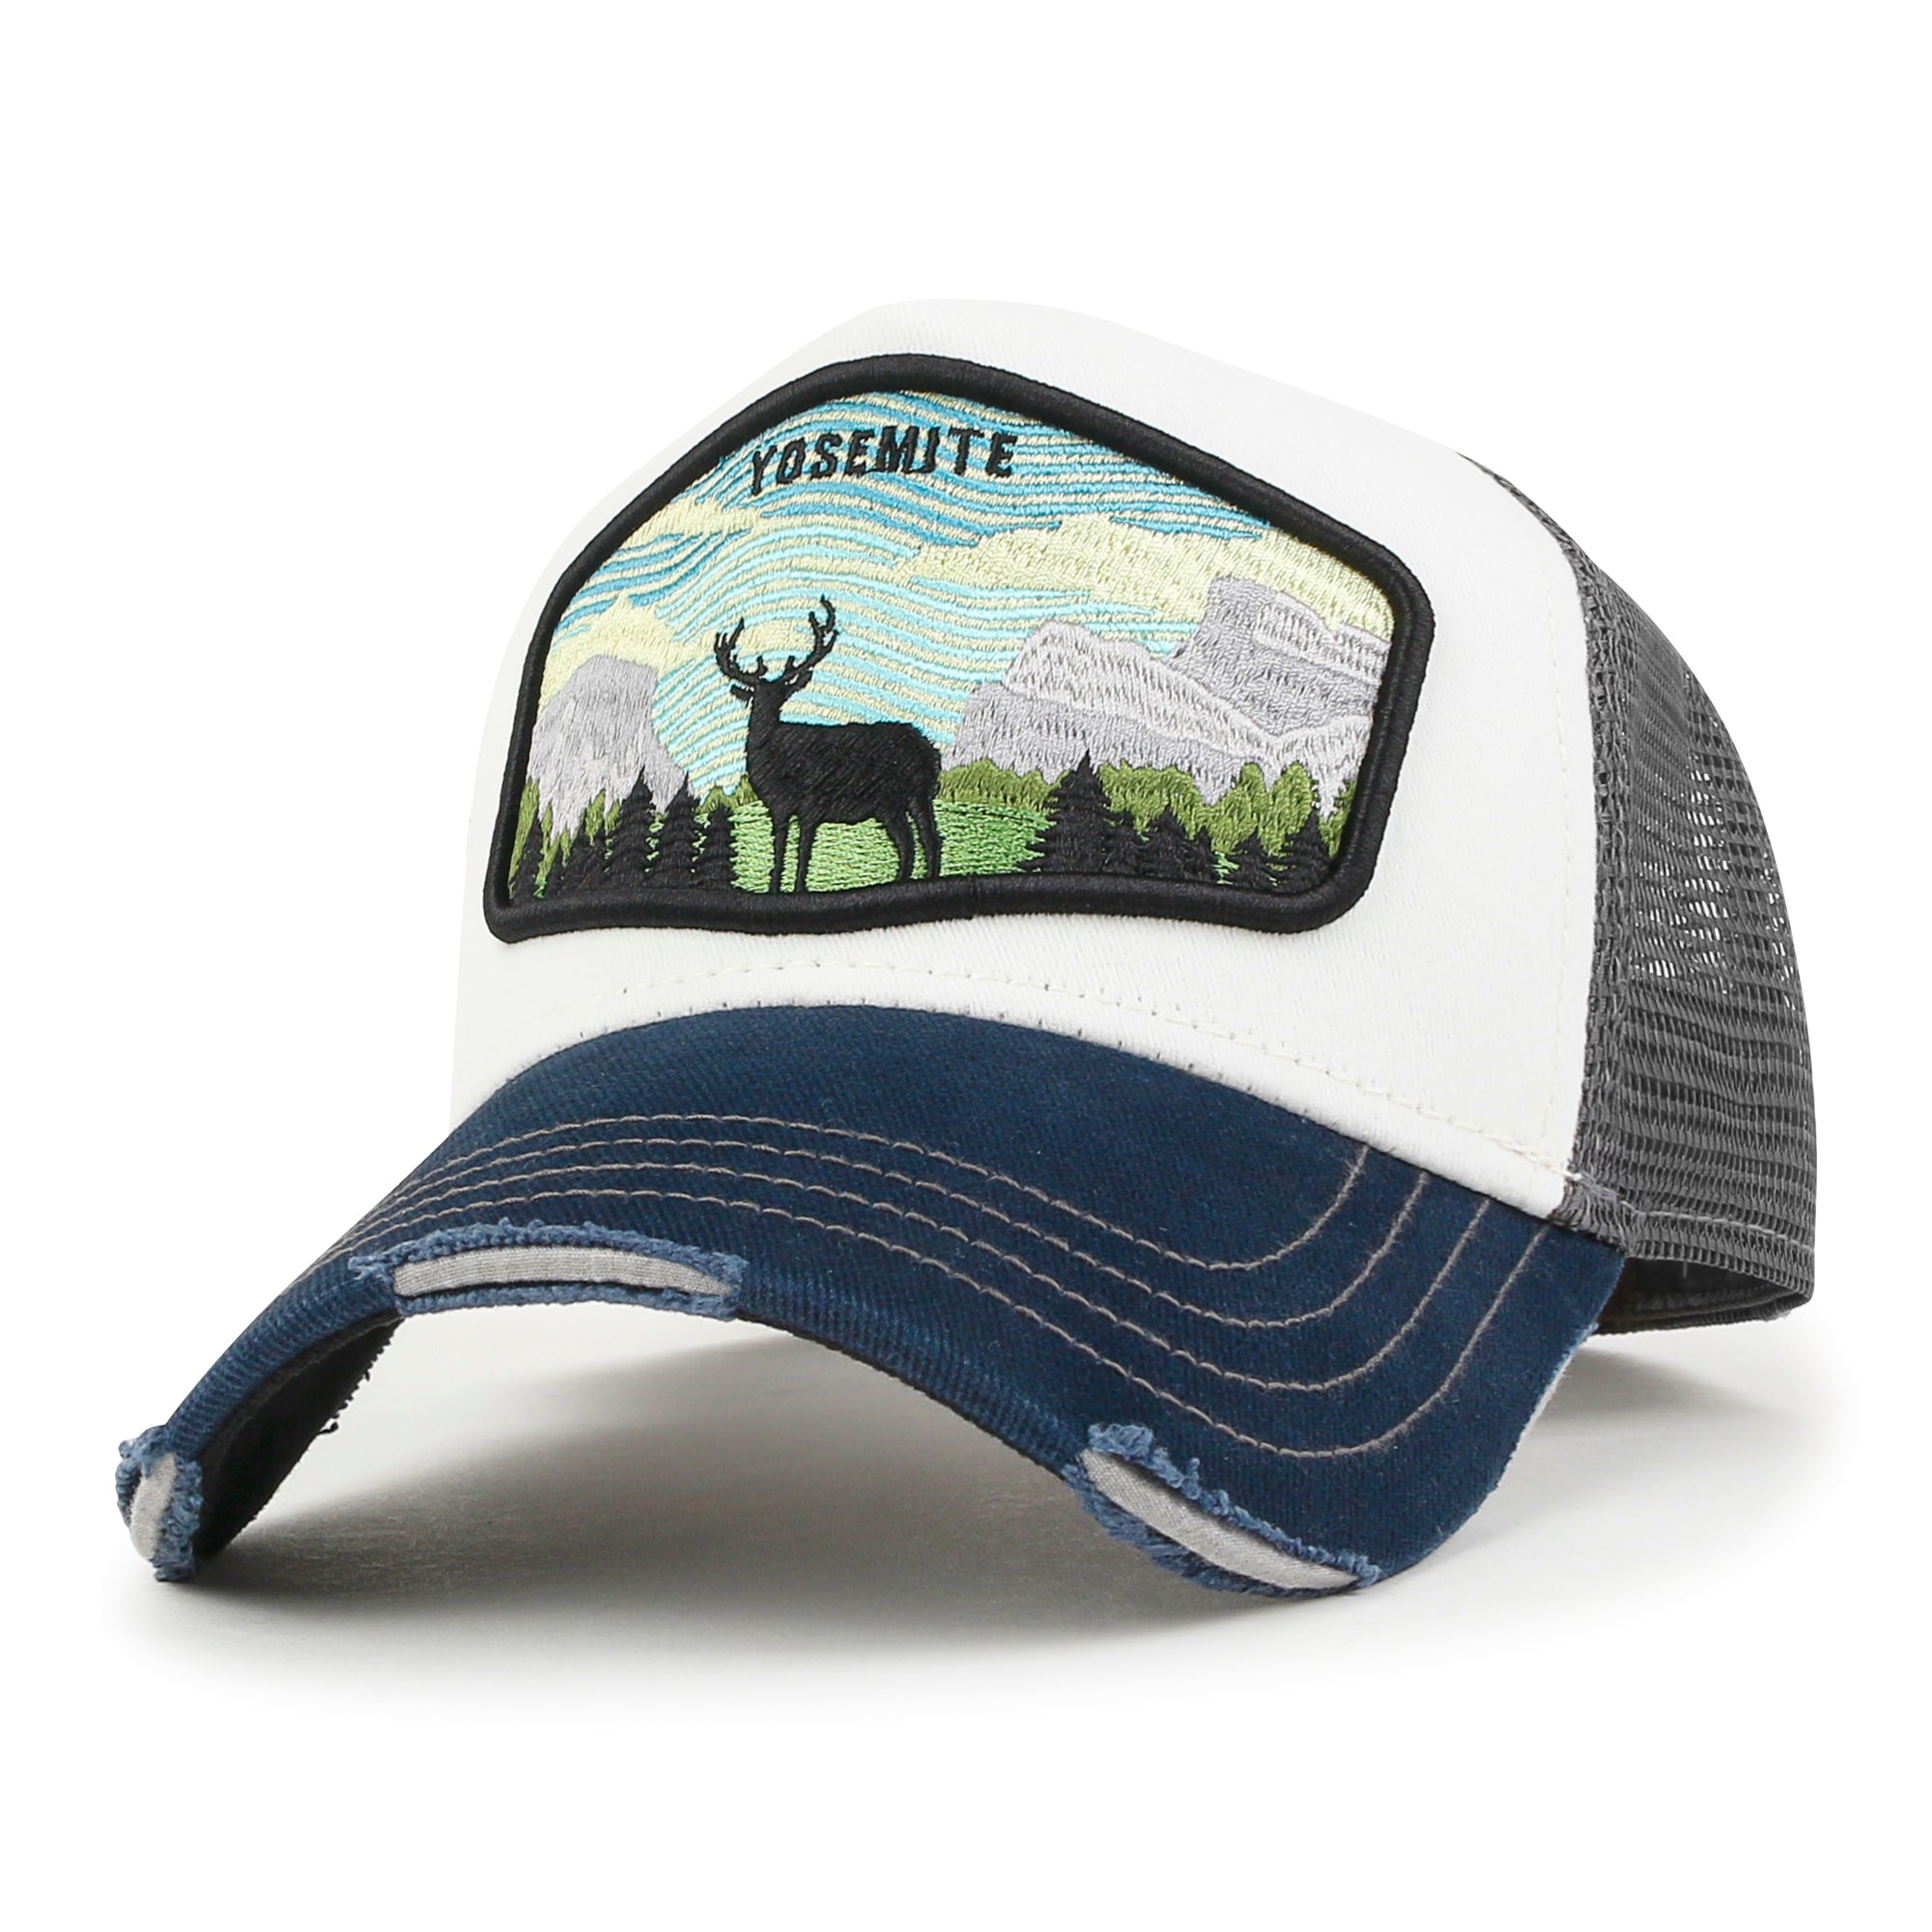 ililily Premium Yosemite Casual Structured Tru Embroidery Cap Baseball